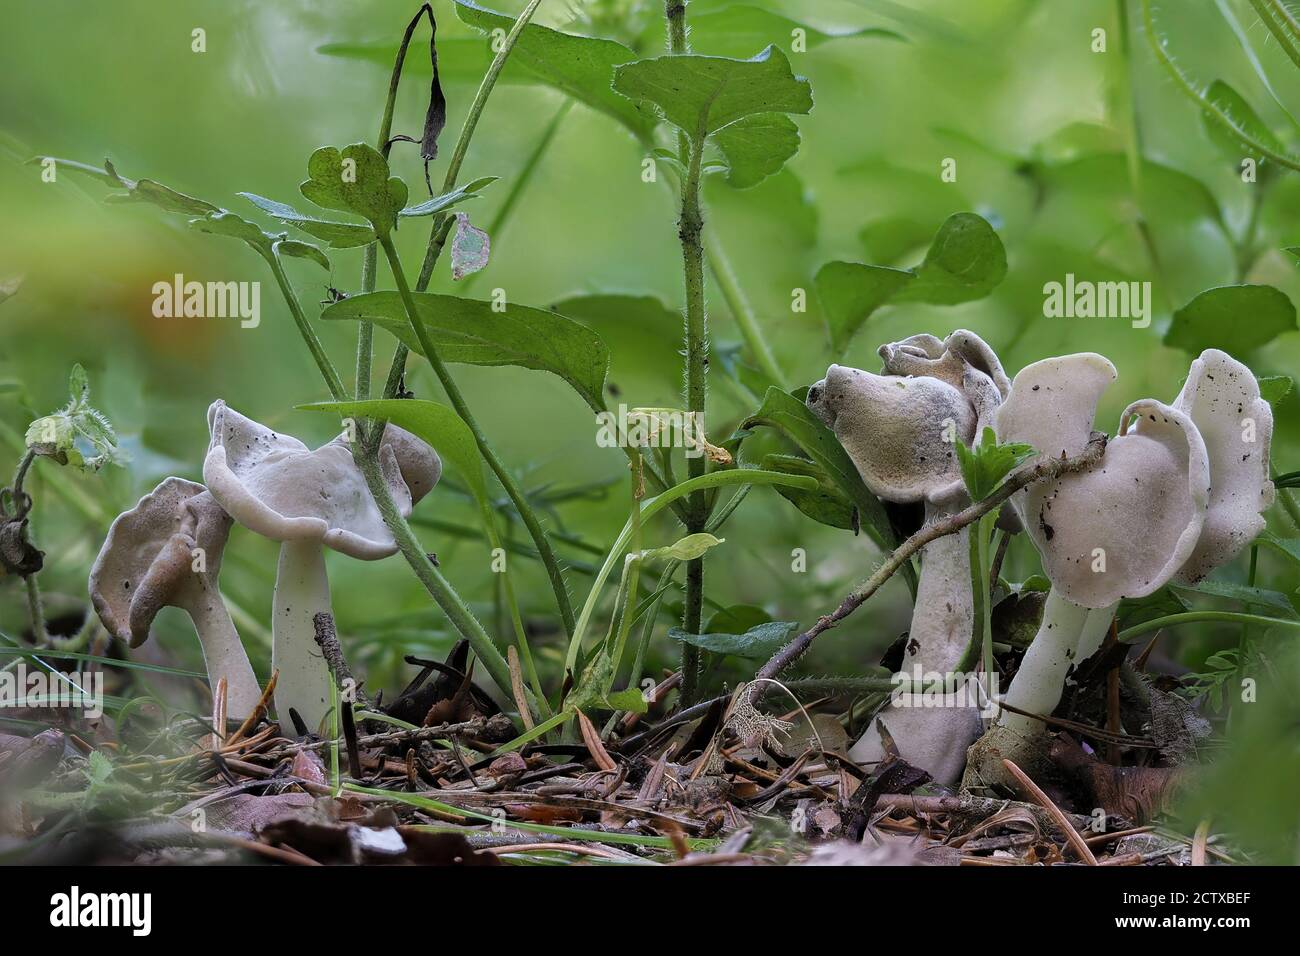 The Helvella latispora is an inedible mushroom , stacked macro photo Stock Photo